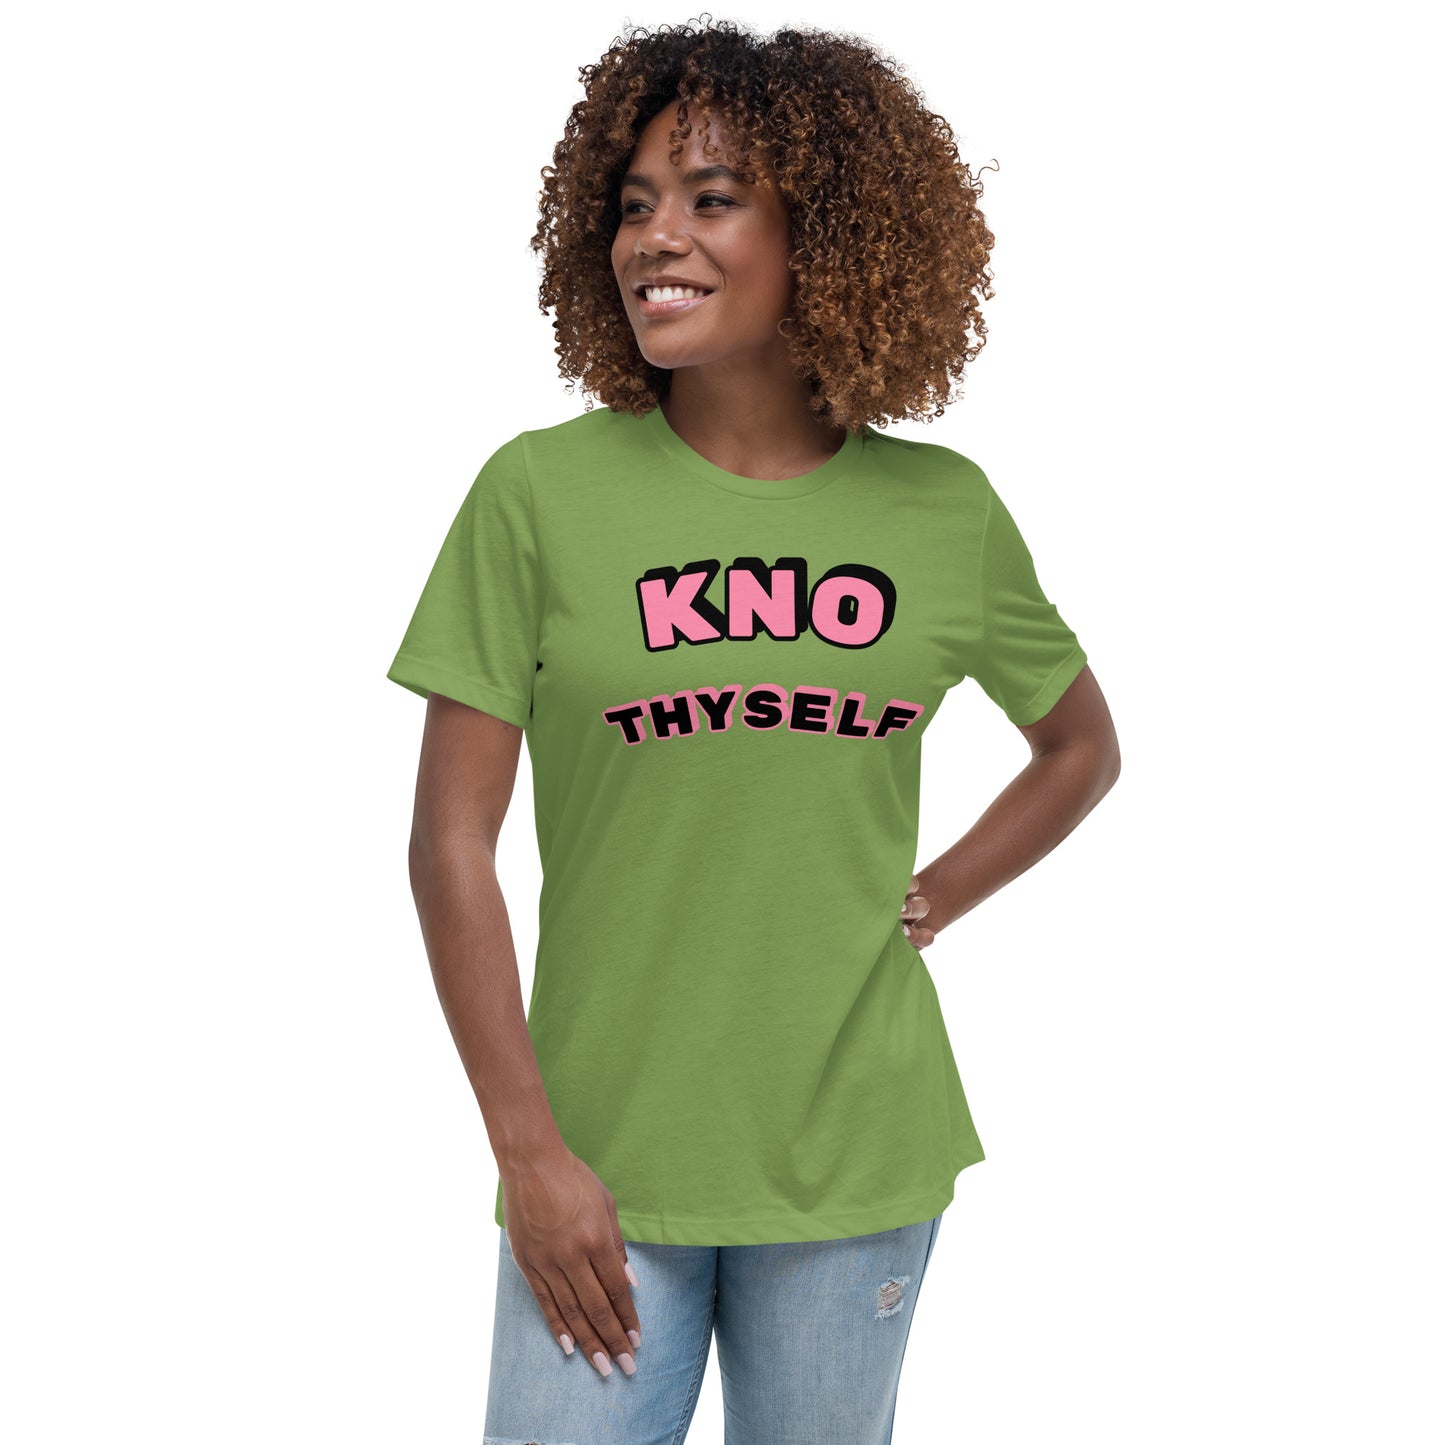 KNO Thyself (Ladies Fit) T-Shirt